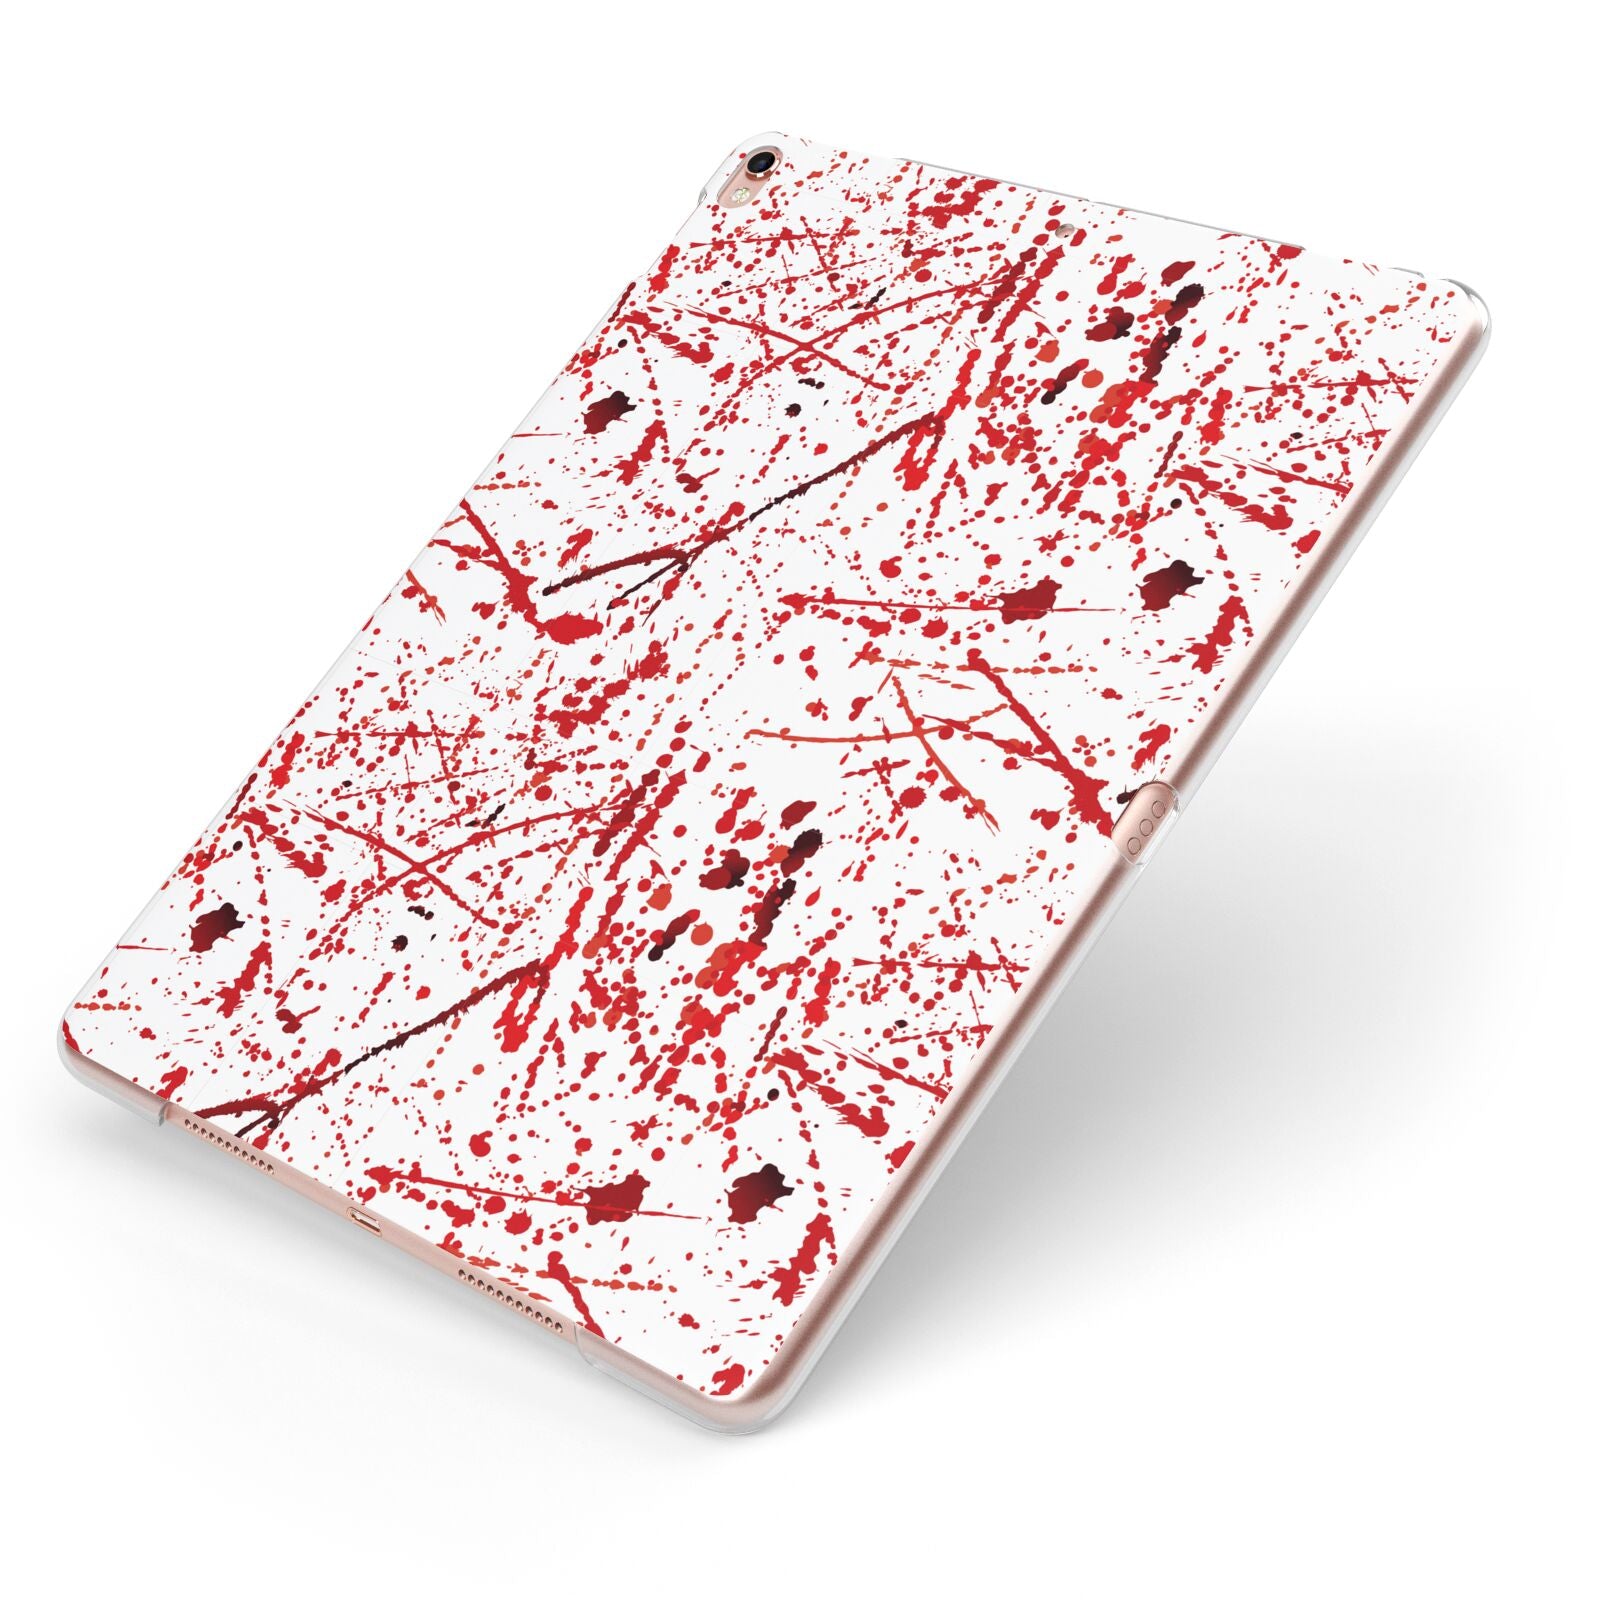 Blood Splatter Apple iPad Case on Rose Gold iPad Side View